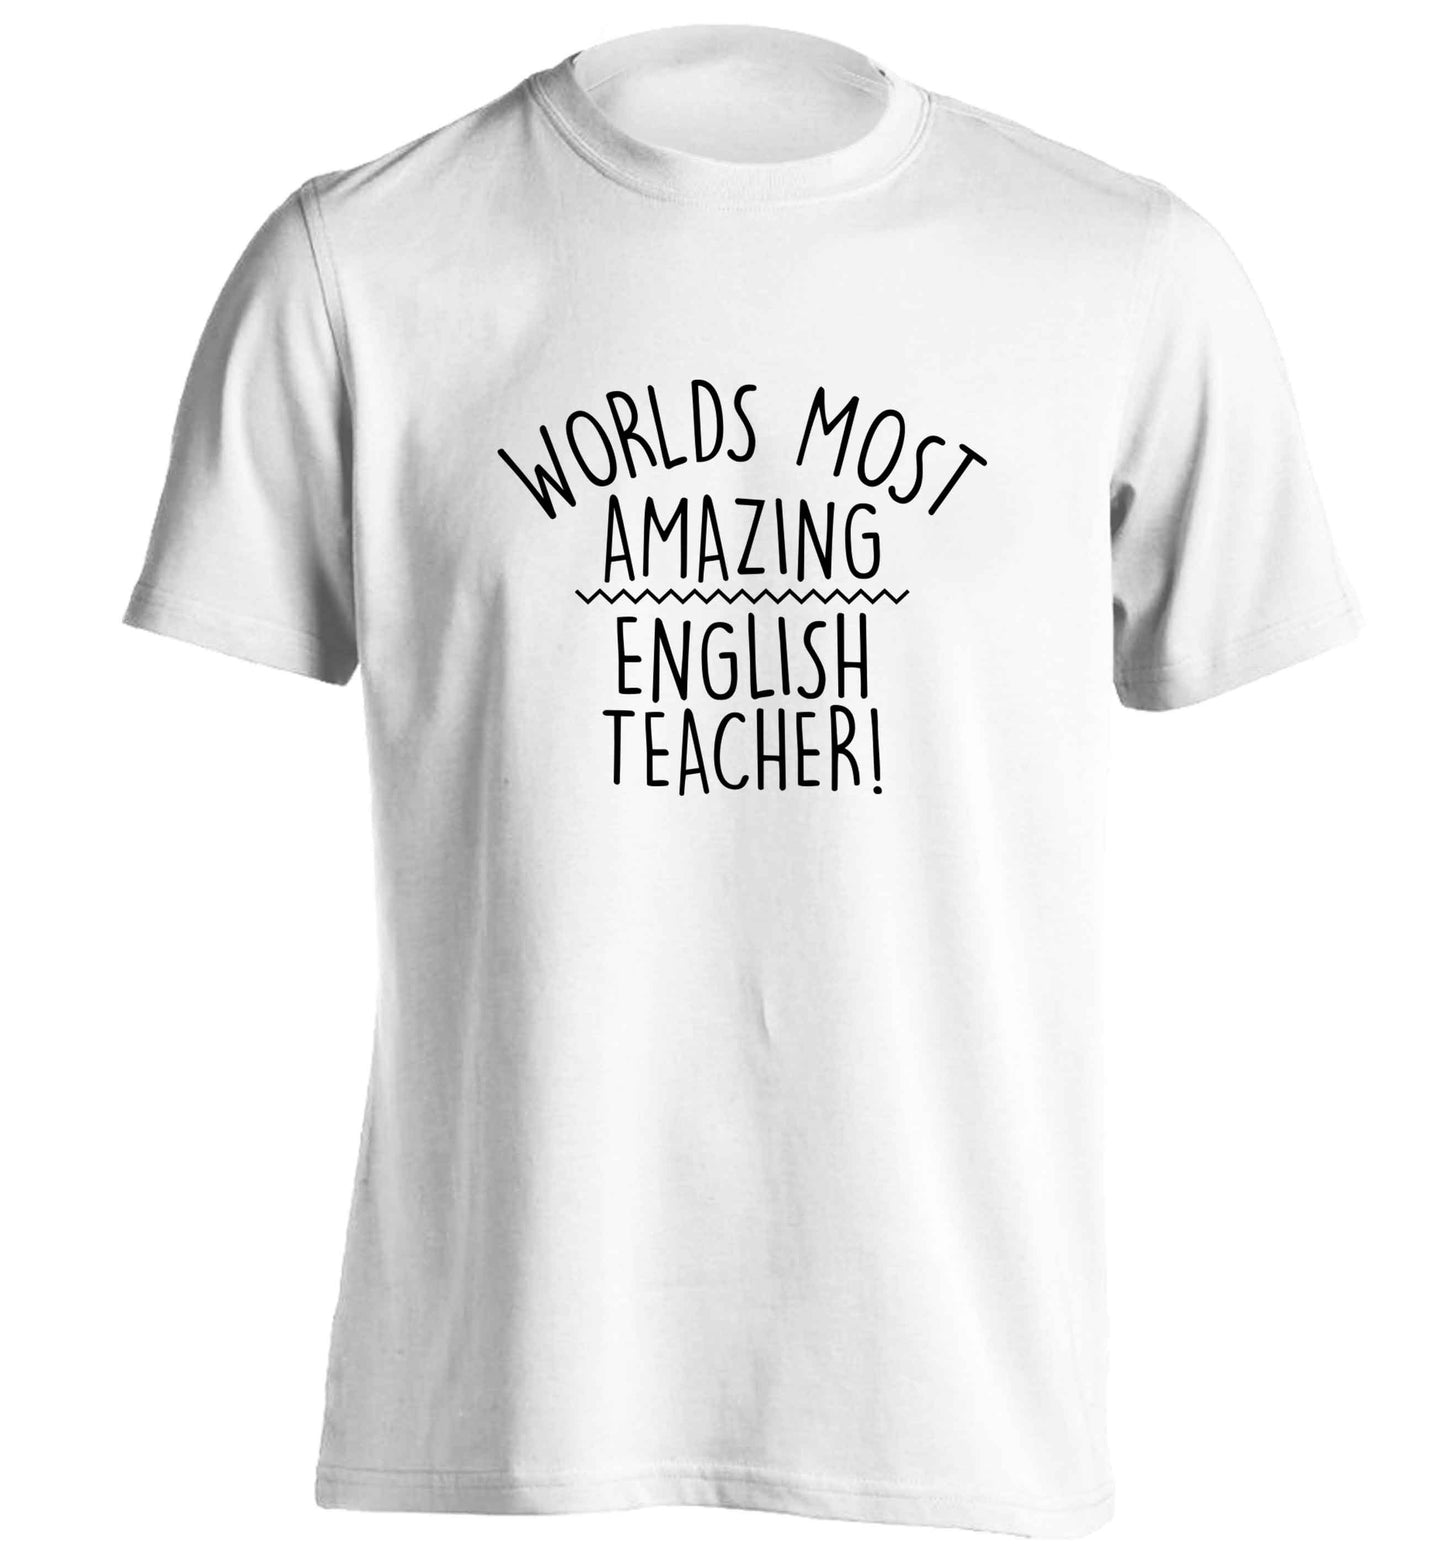 Worlds most amazing English teacher adults unisex white Tshirt 2XL